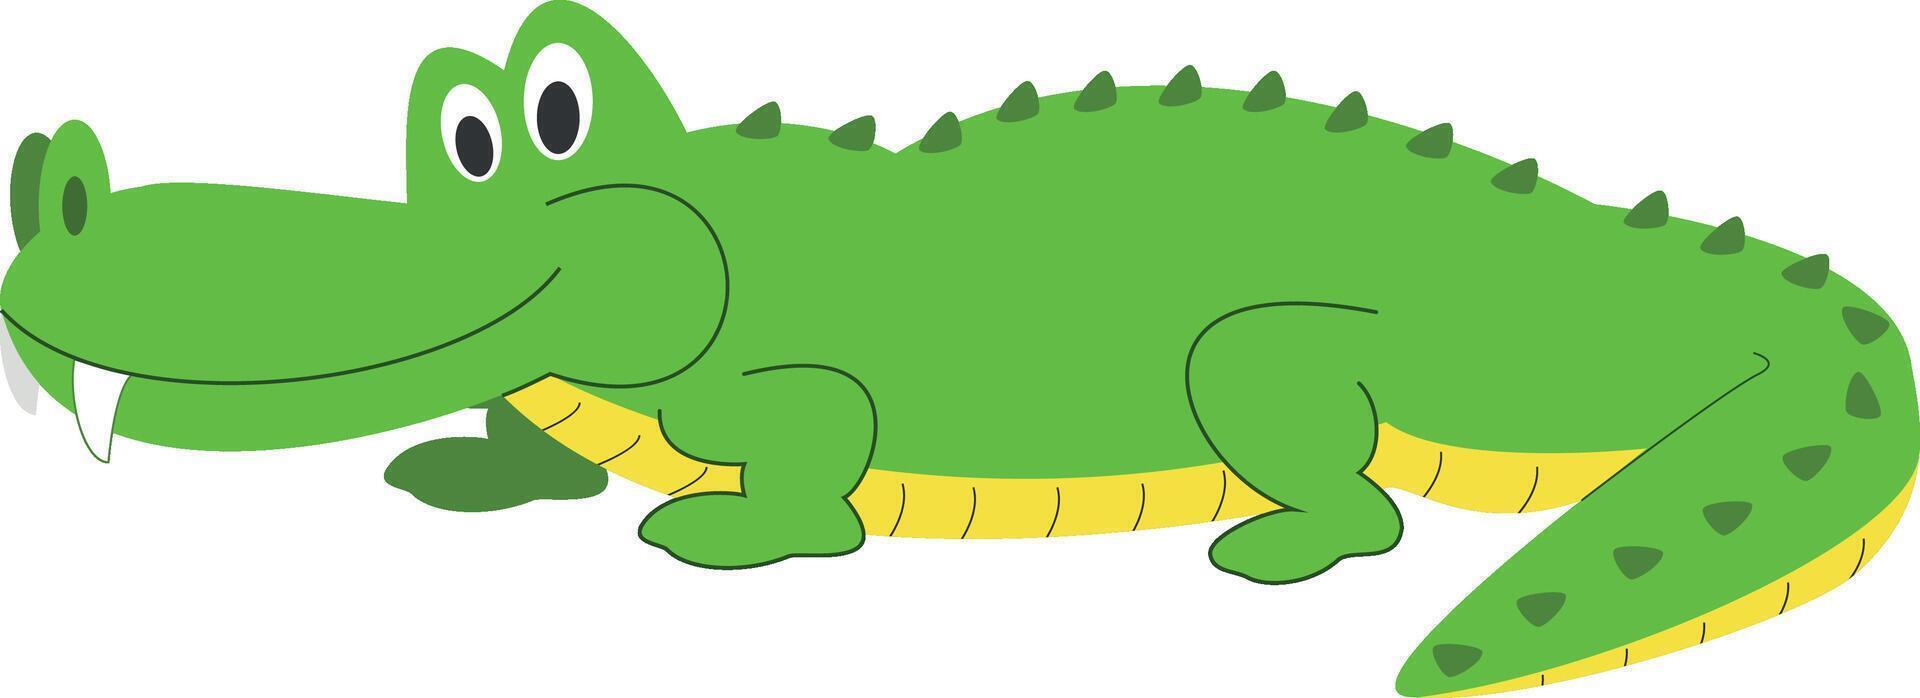 mignonne dessin animé alligator illustration vecteur